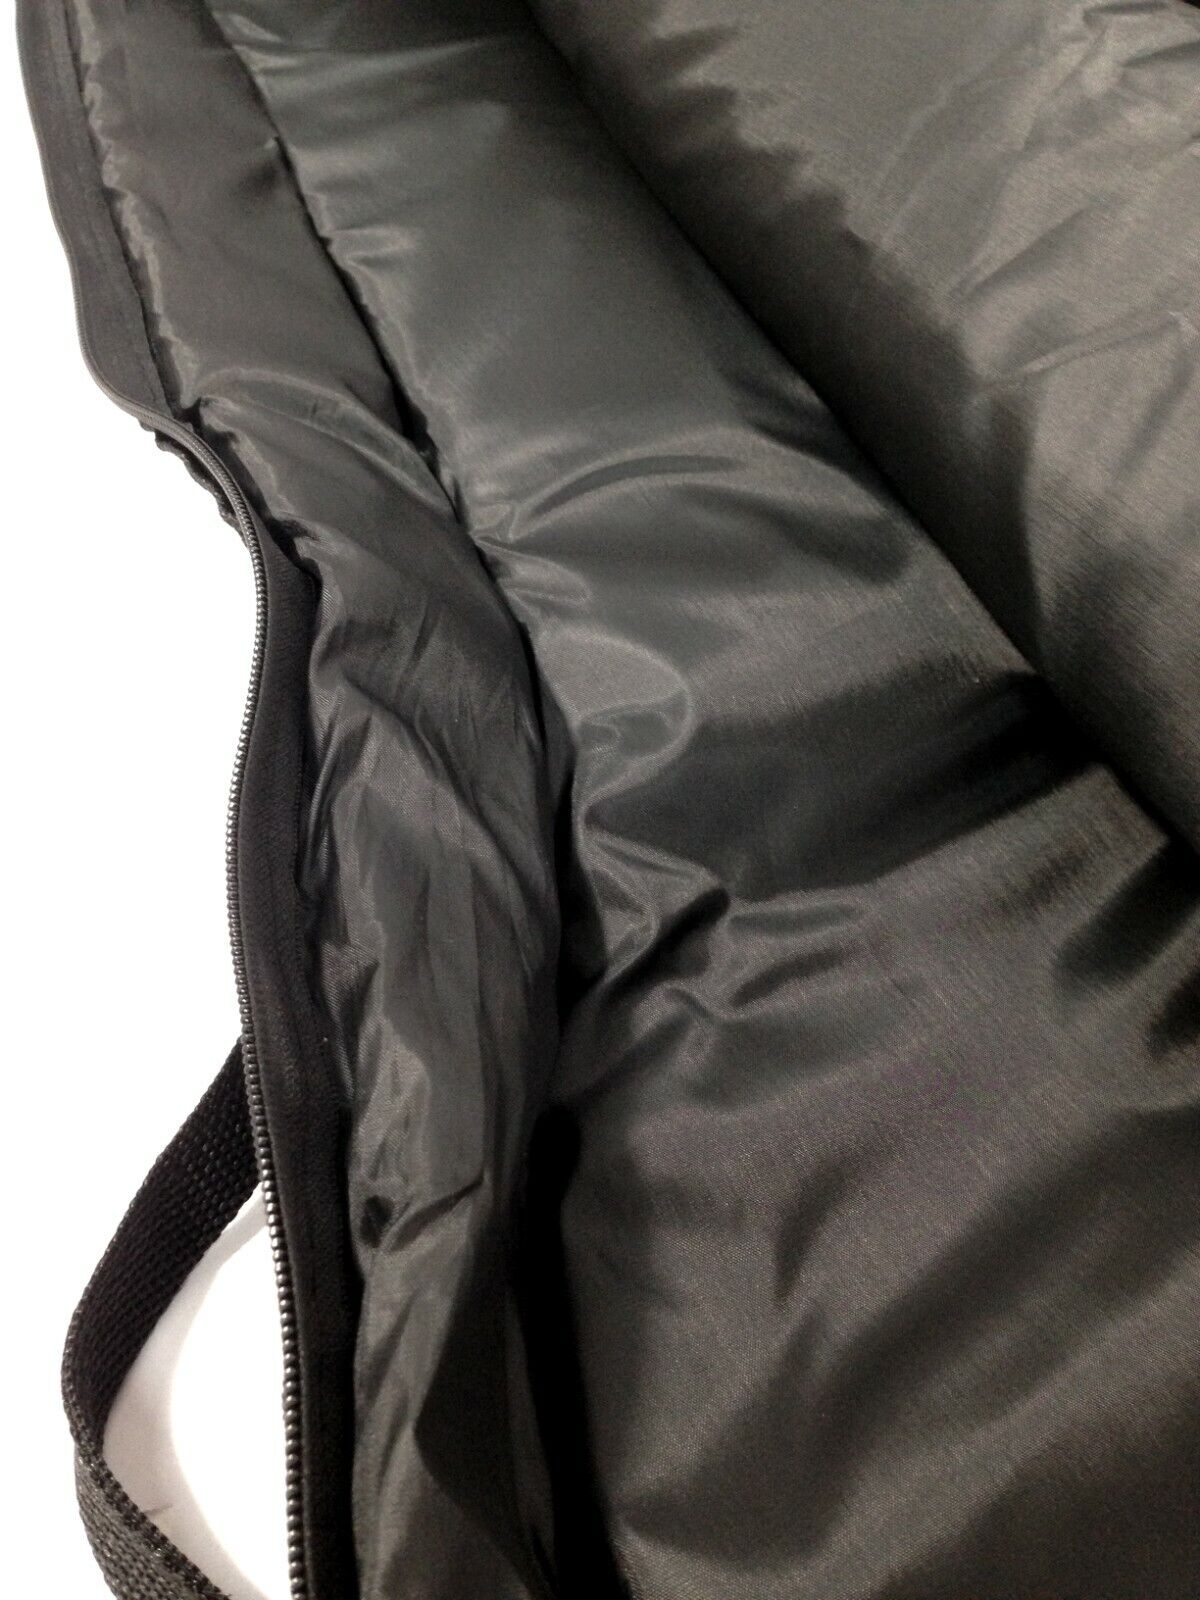 Haze Double Neck Electric Guitar Bag, 5mm Padded,Black, Full Size. PBE19010DBBAG